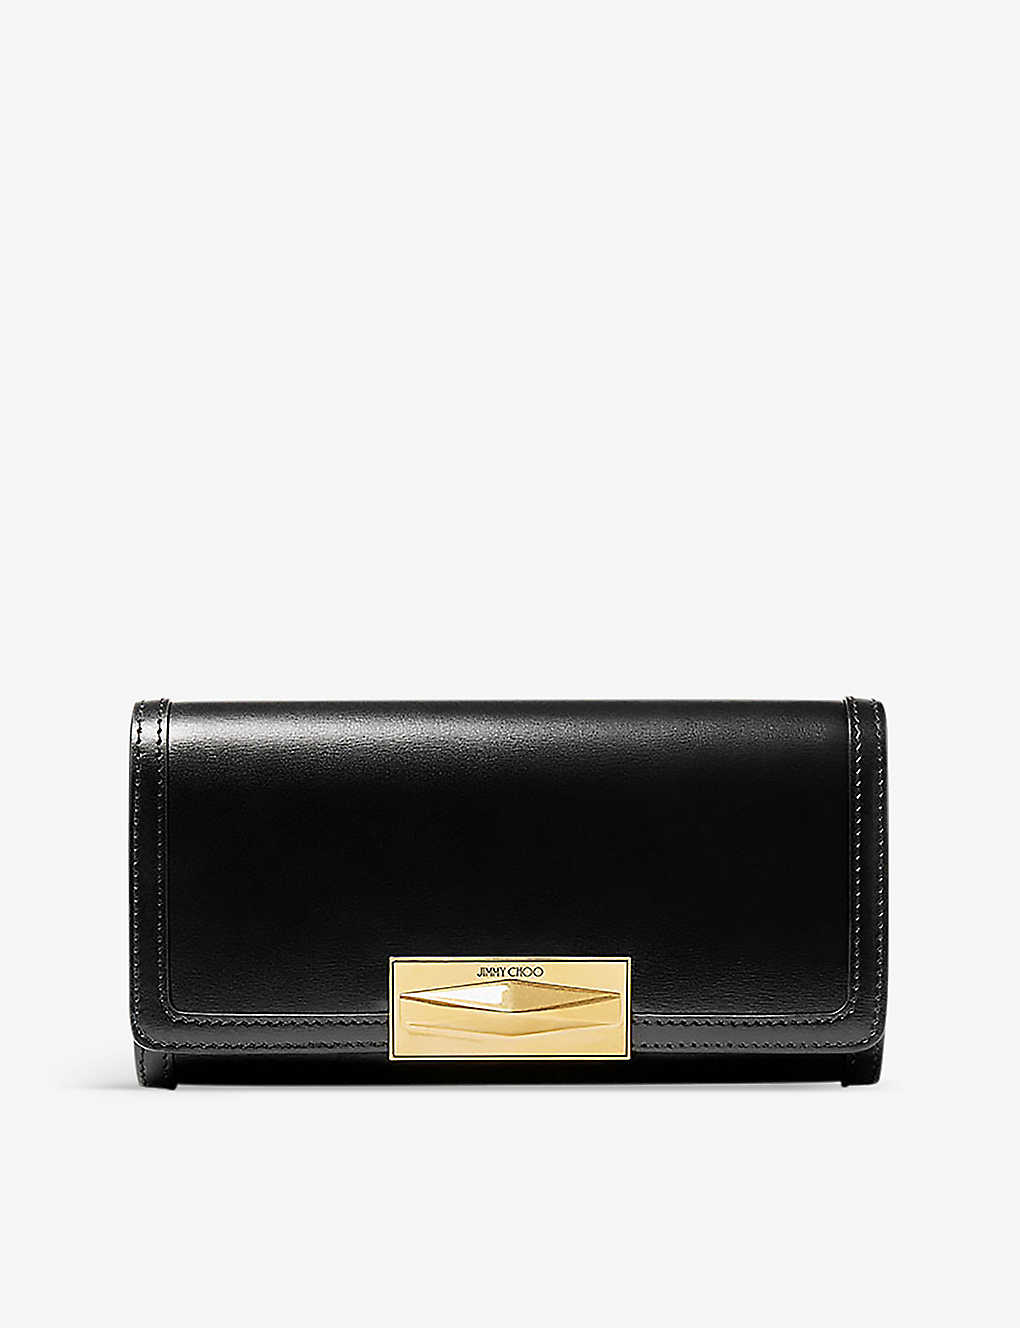 Jimmy Choo Diamond Leather Shoulder Bag In Black/gold